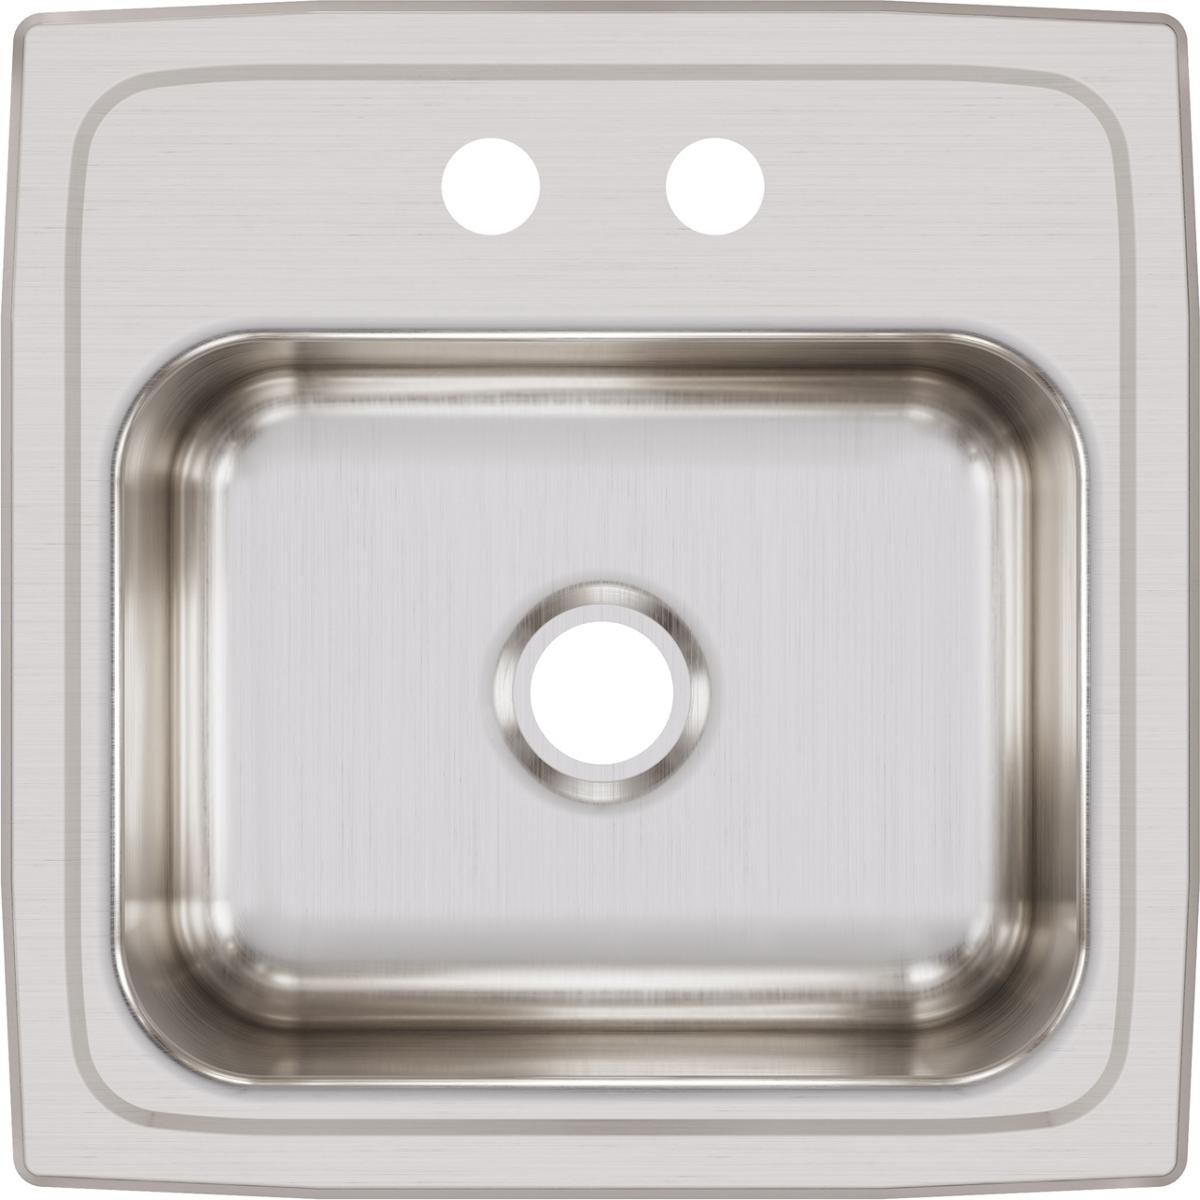 Elkay Lustertone Classic Stainless Steel 15" x 15" x 6-1/8" Single Bowl Drop-in Bar Sink